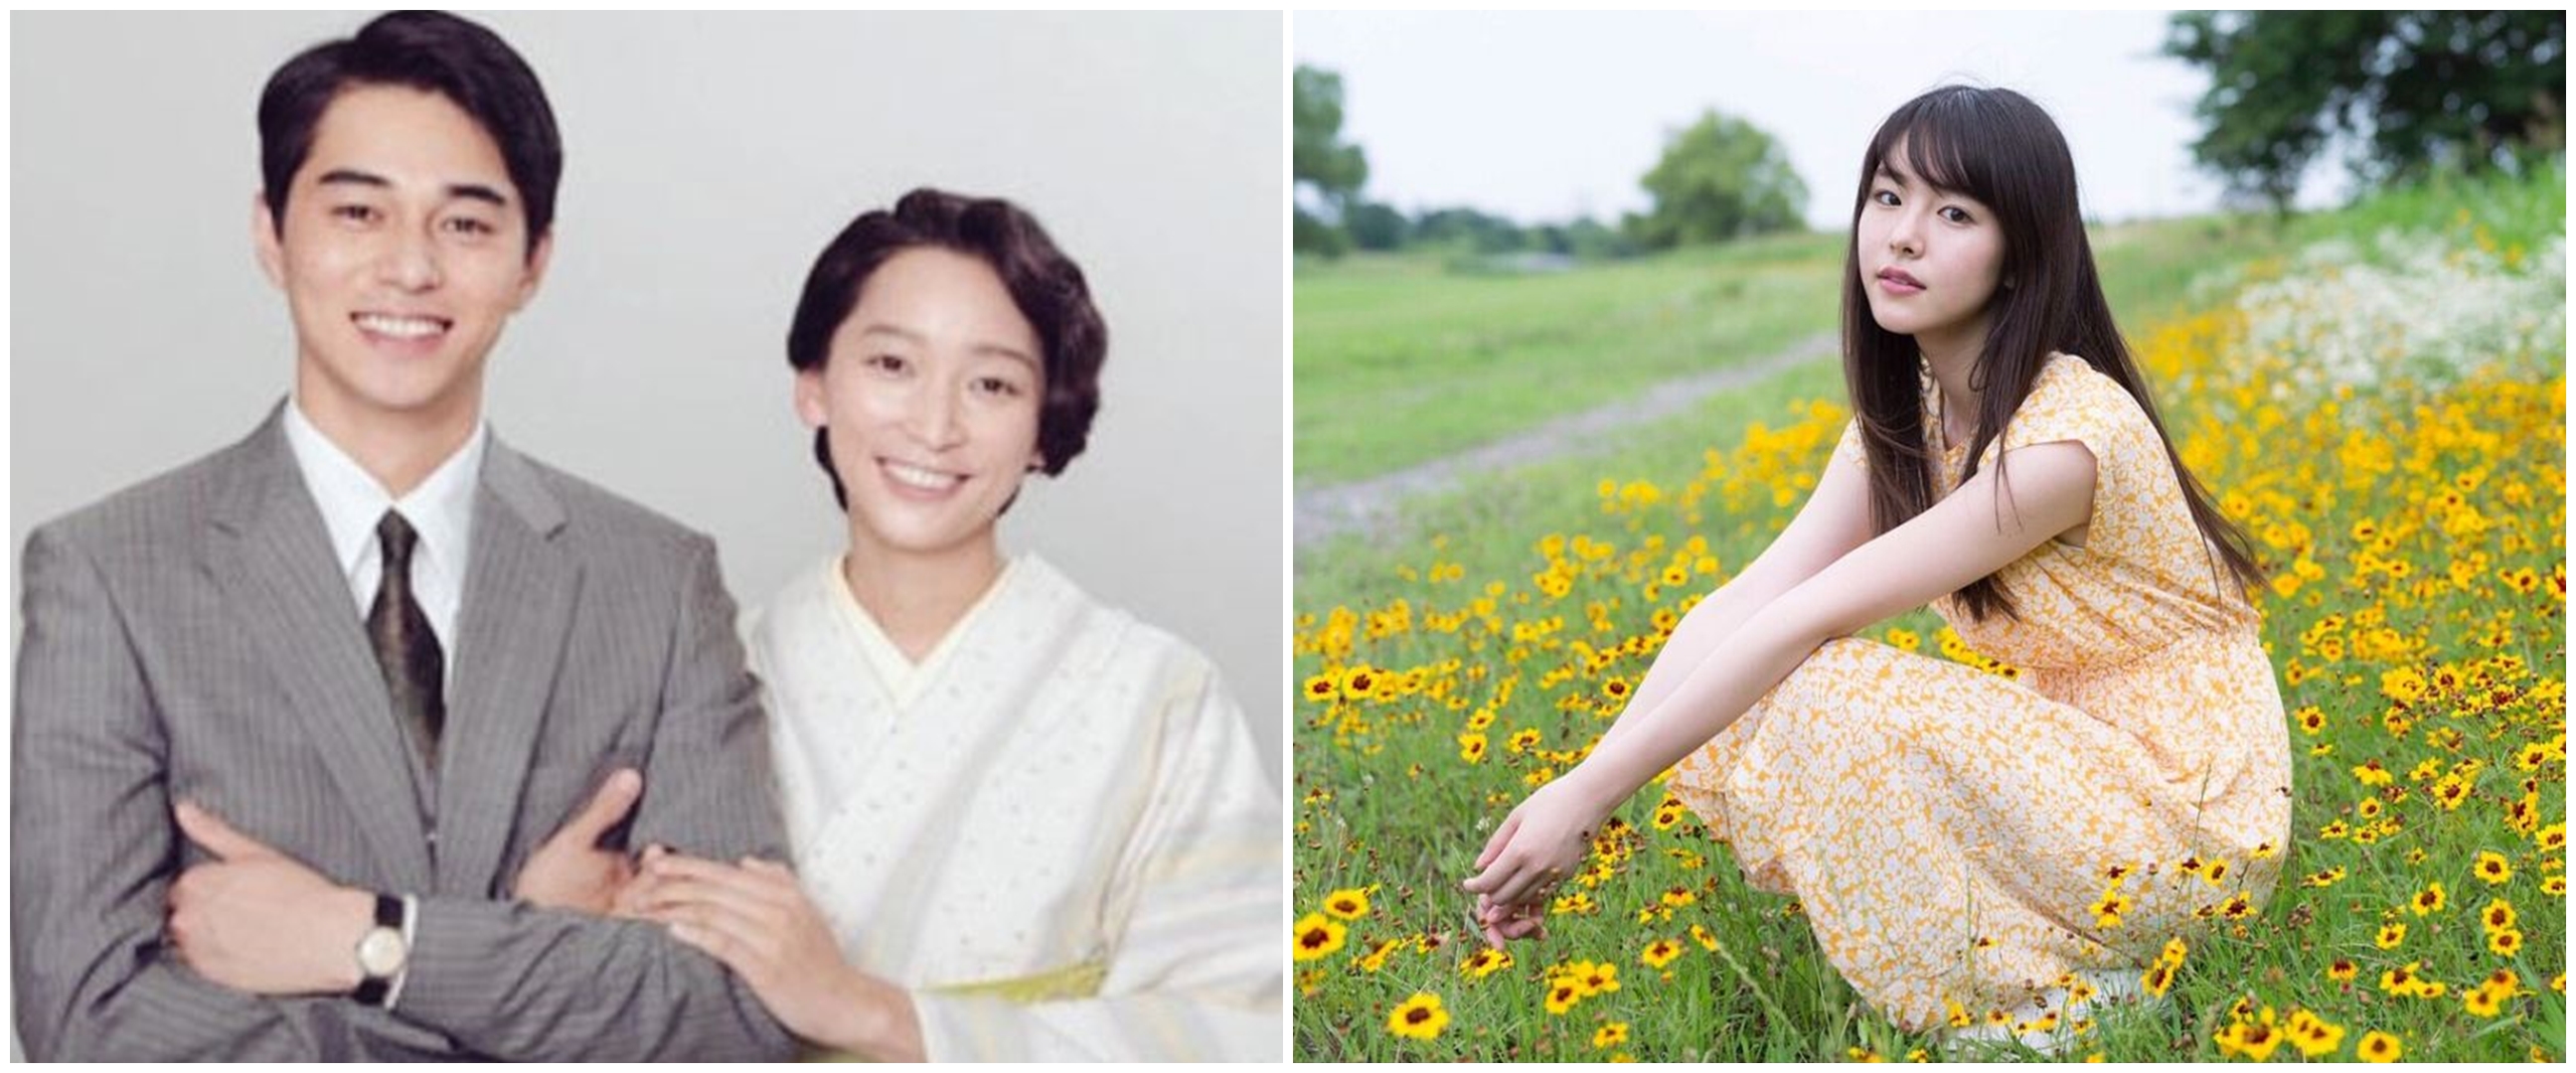 Pilu, kisah Anne Watanabe diselingkuhi Masahiro Higashide saat hamil